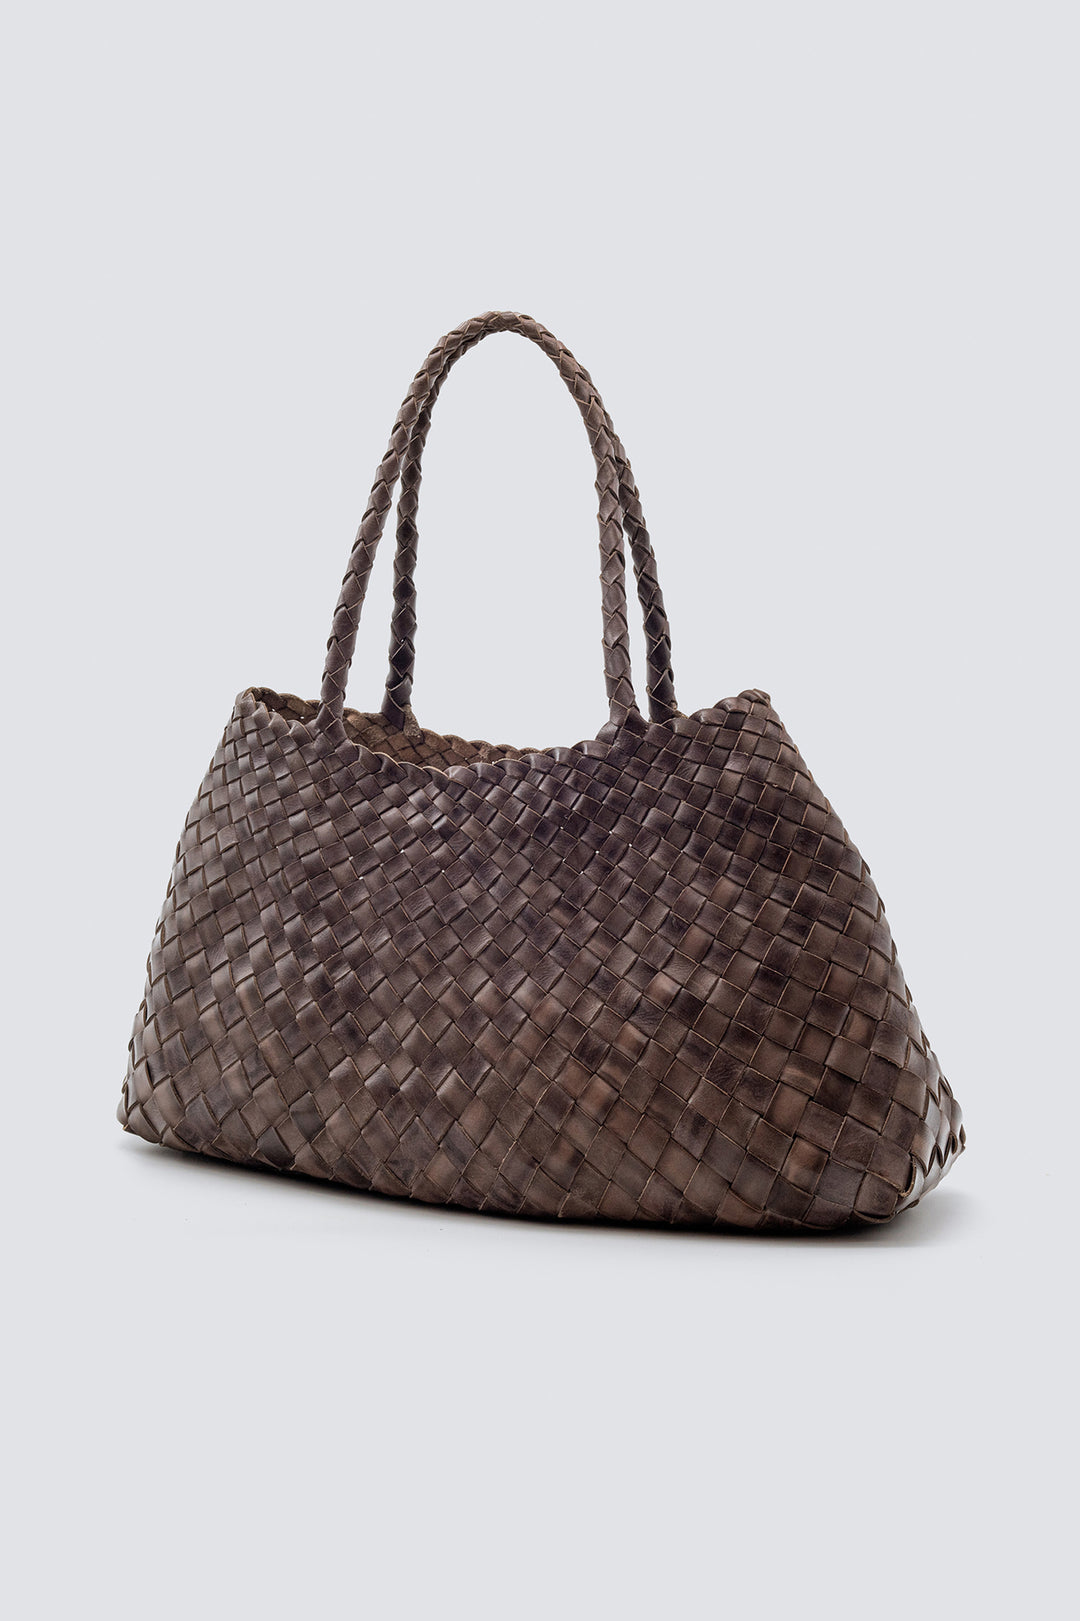 Dragon Diffusion woven leather bag handmade - Santa Croce Big Grey